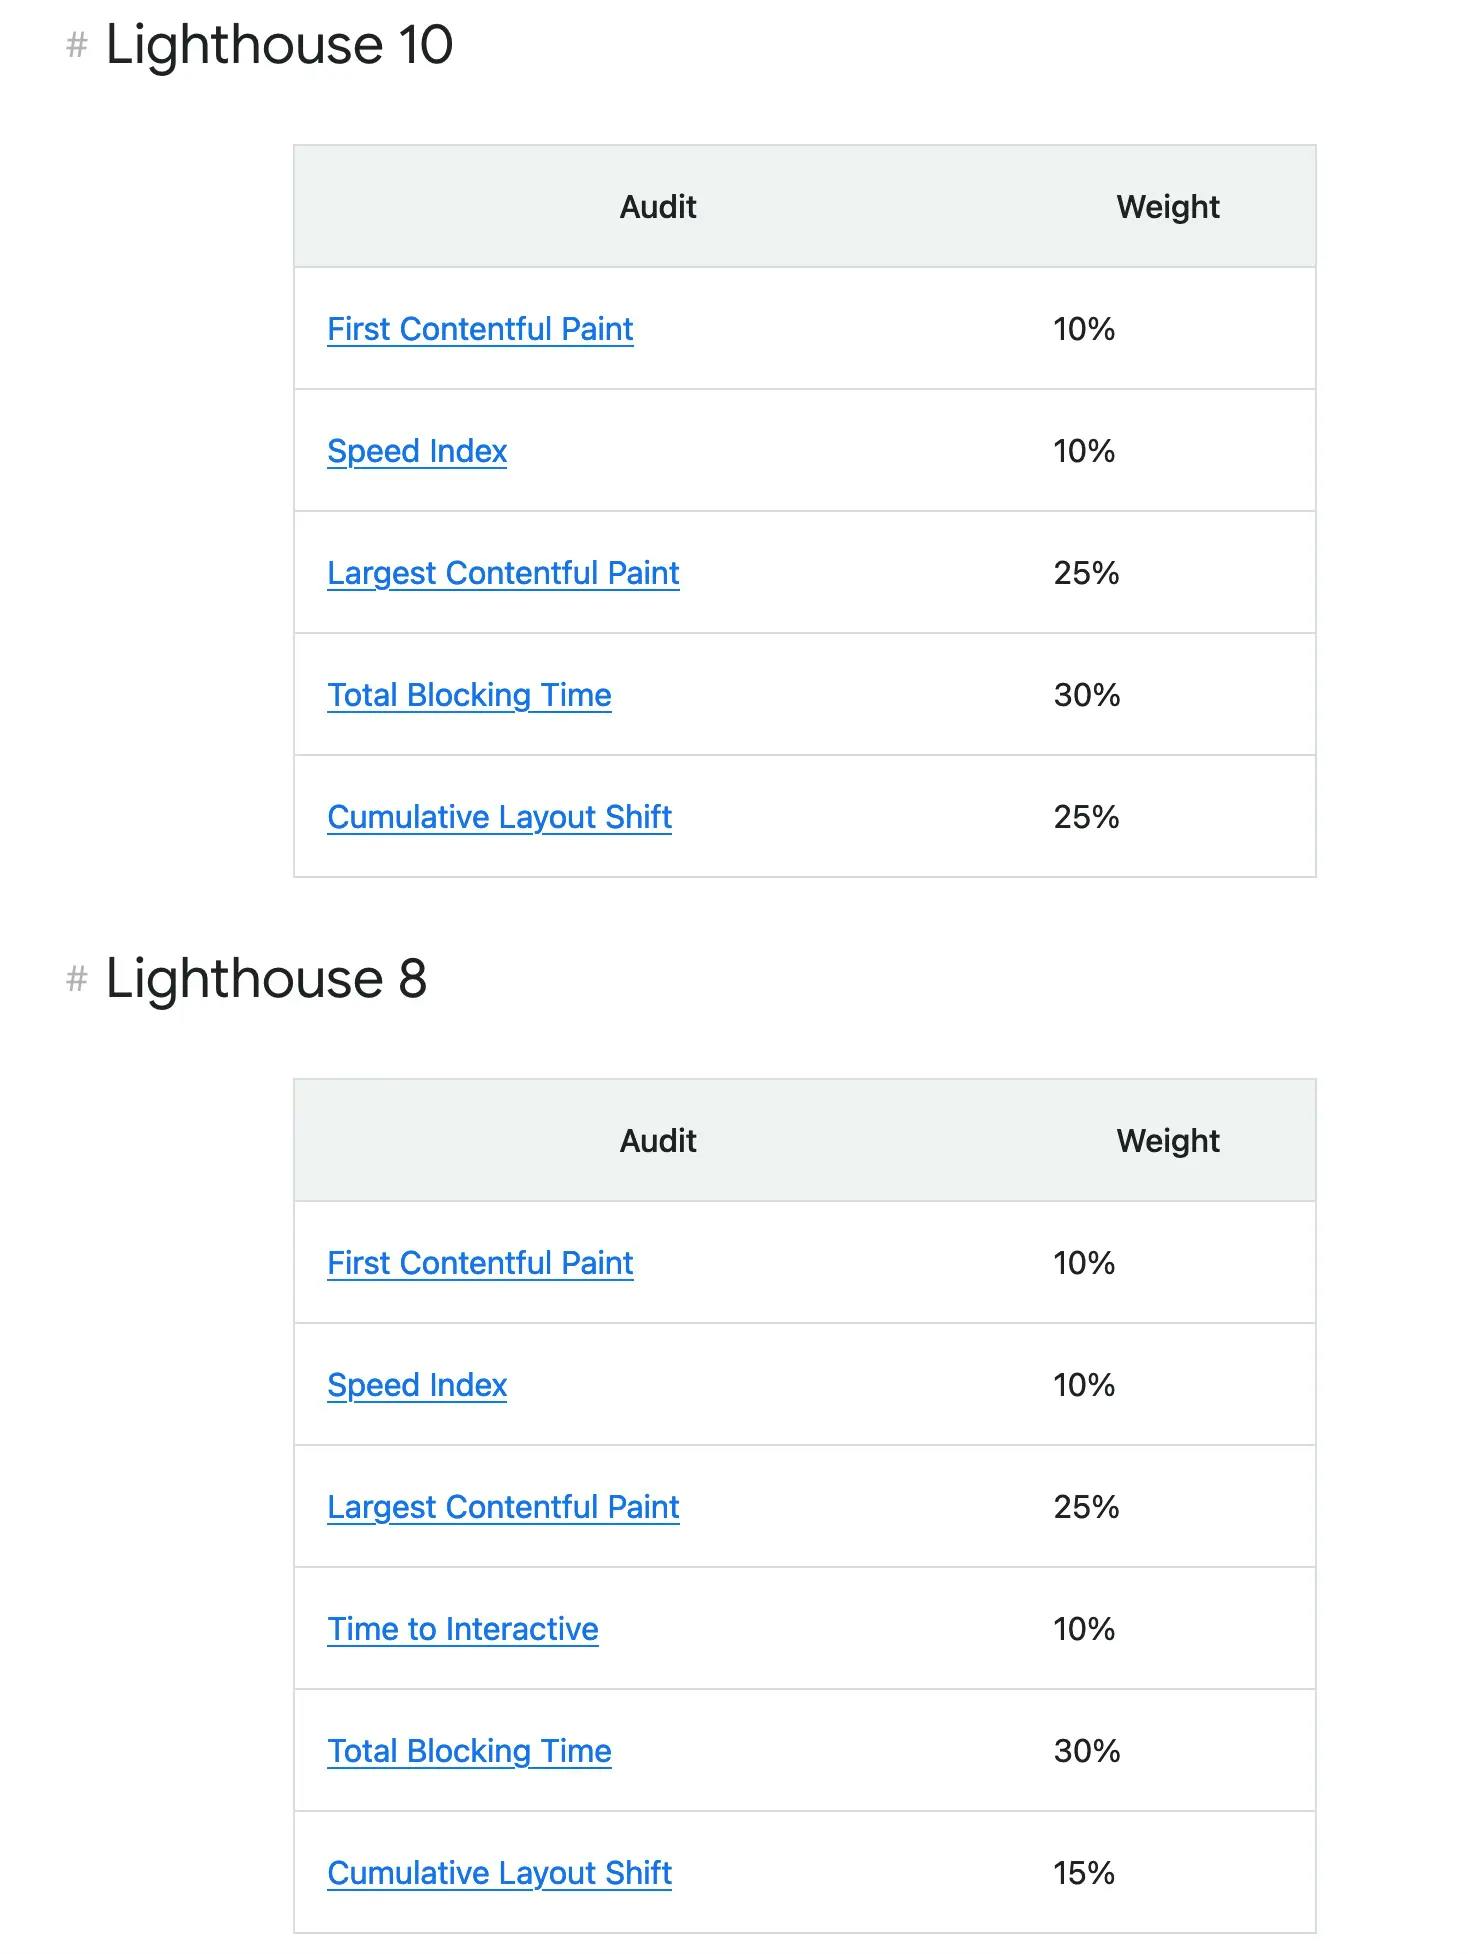 Lighthouse 8 vs Lighthouse 10 performance score metrics